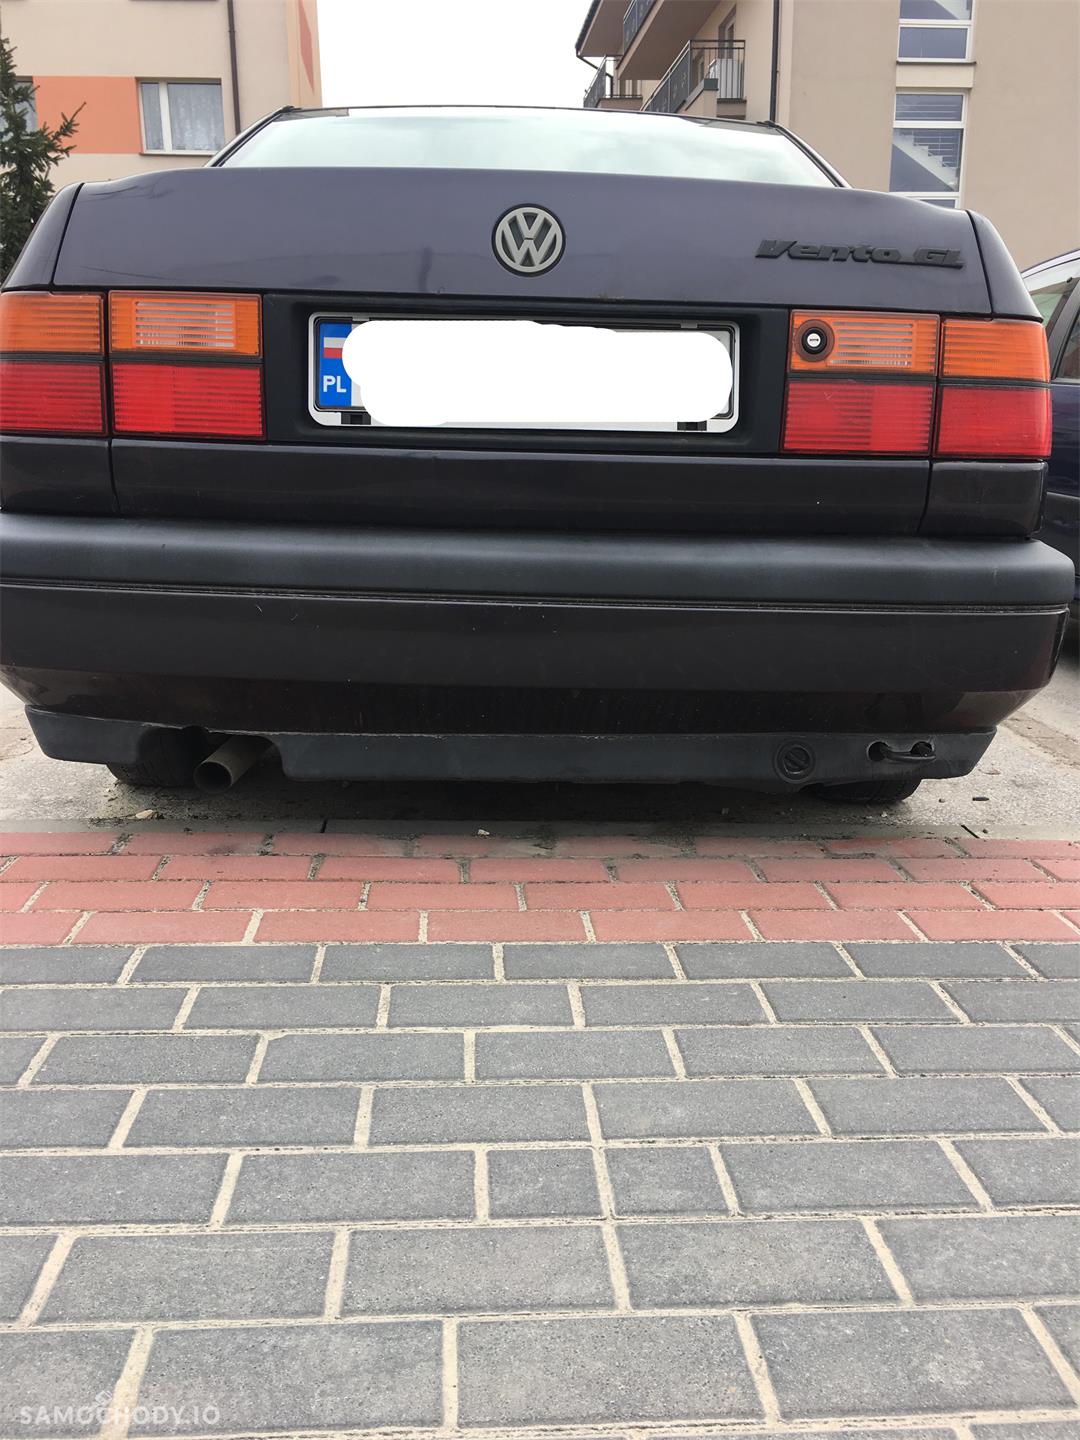 Volkswagen Vento Sprzedam samochód volkswagen vento 1.8 LPG 11